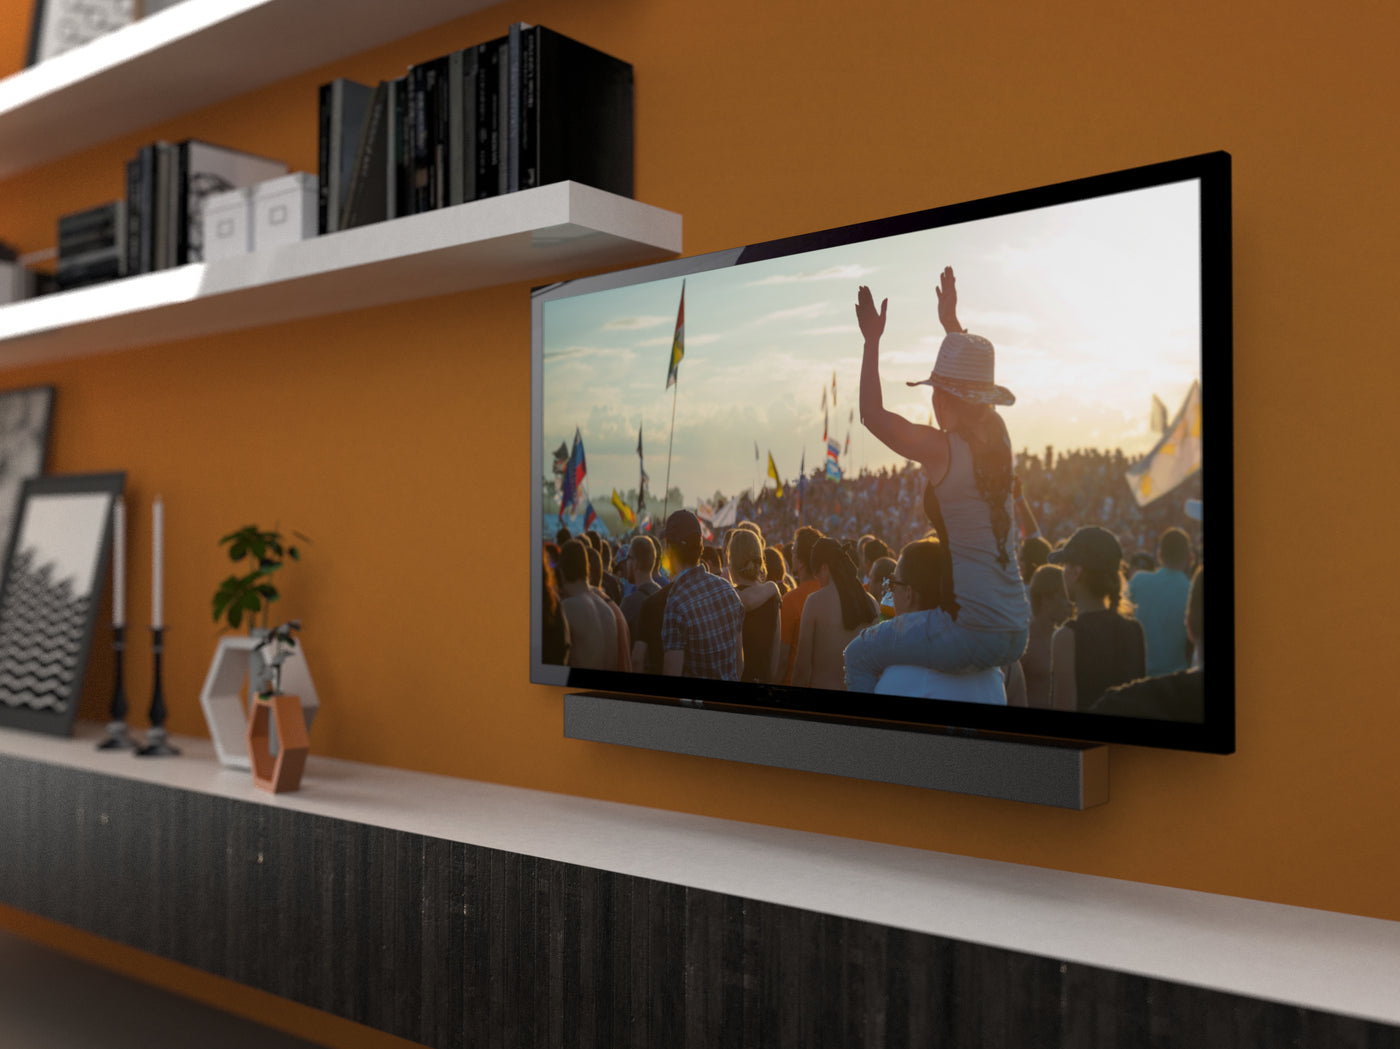 Universal Sound Bar Mount, Compatible With VESA Compliant TVs and Mounts - SB100